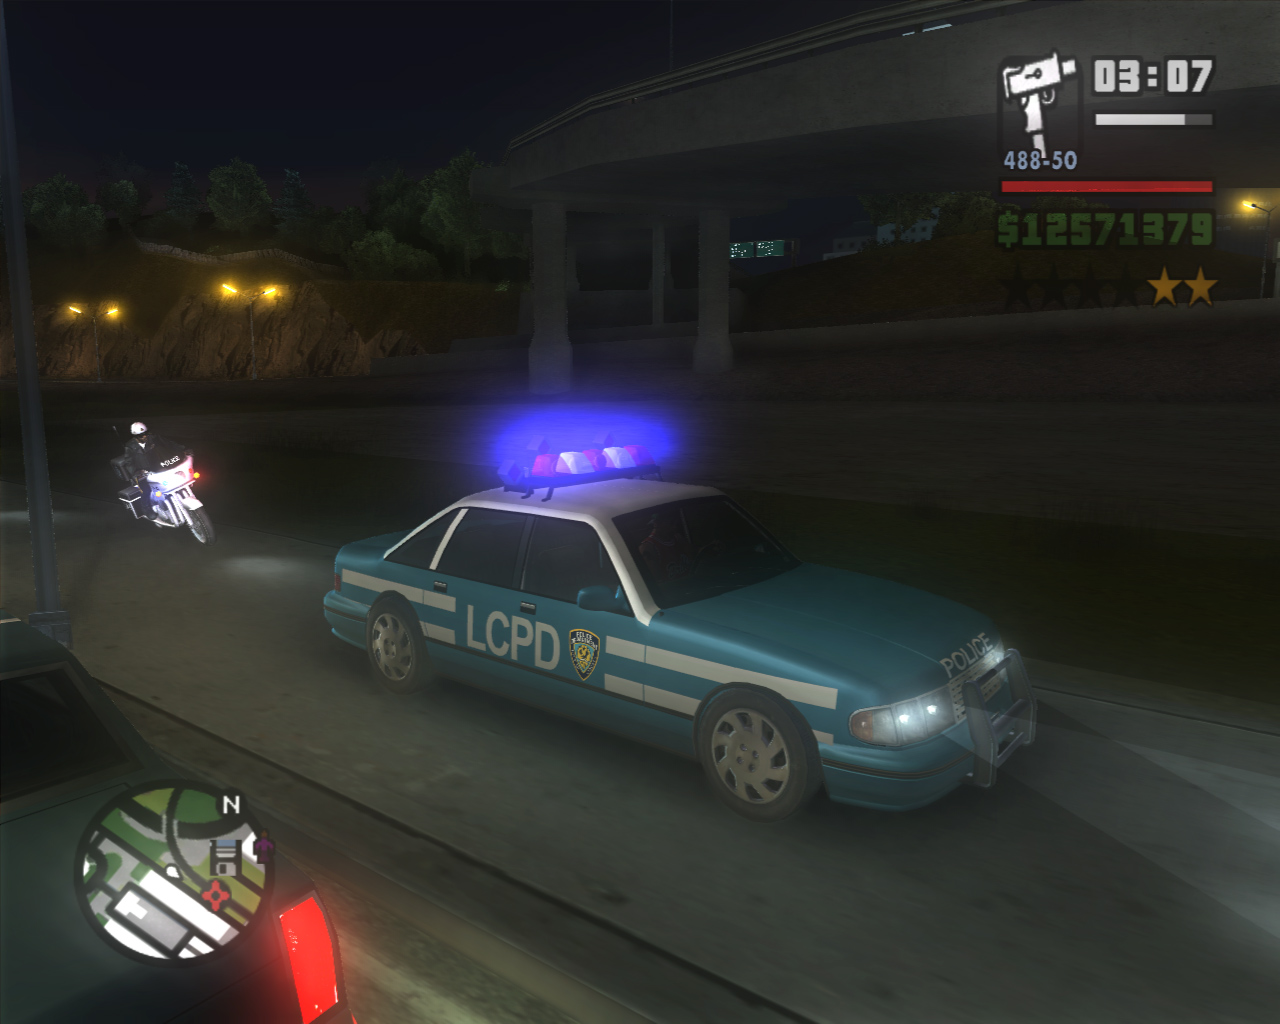 gta 5 beta police car